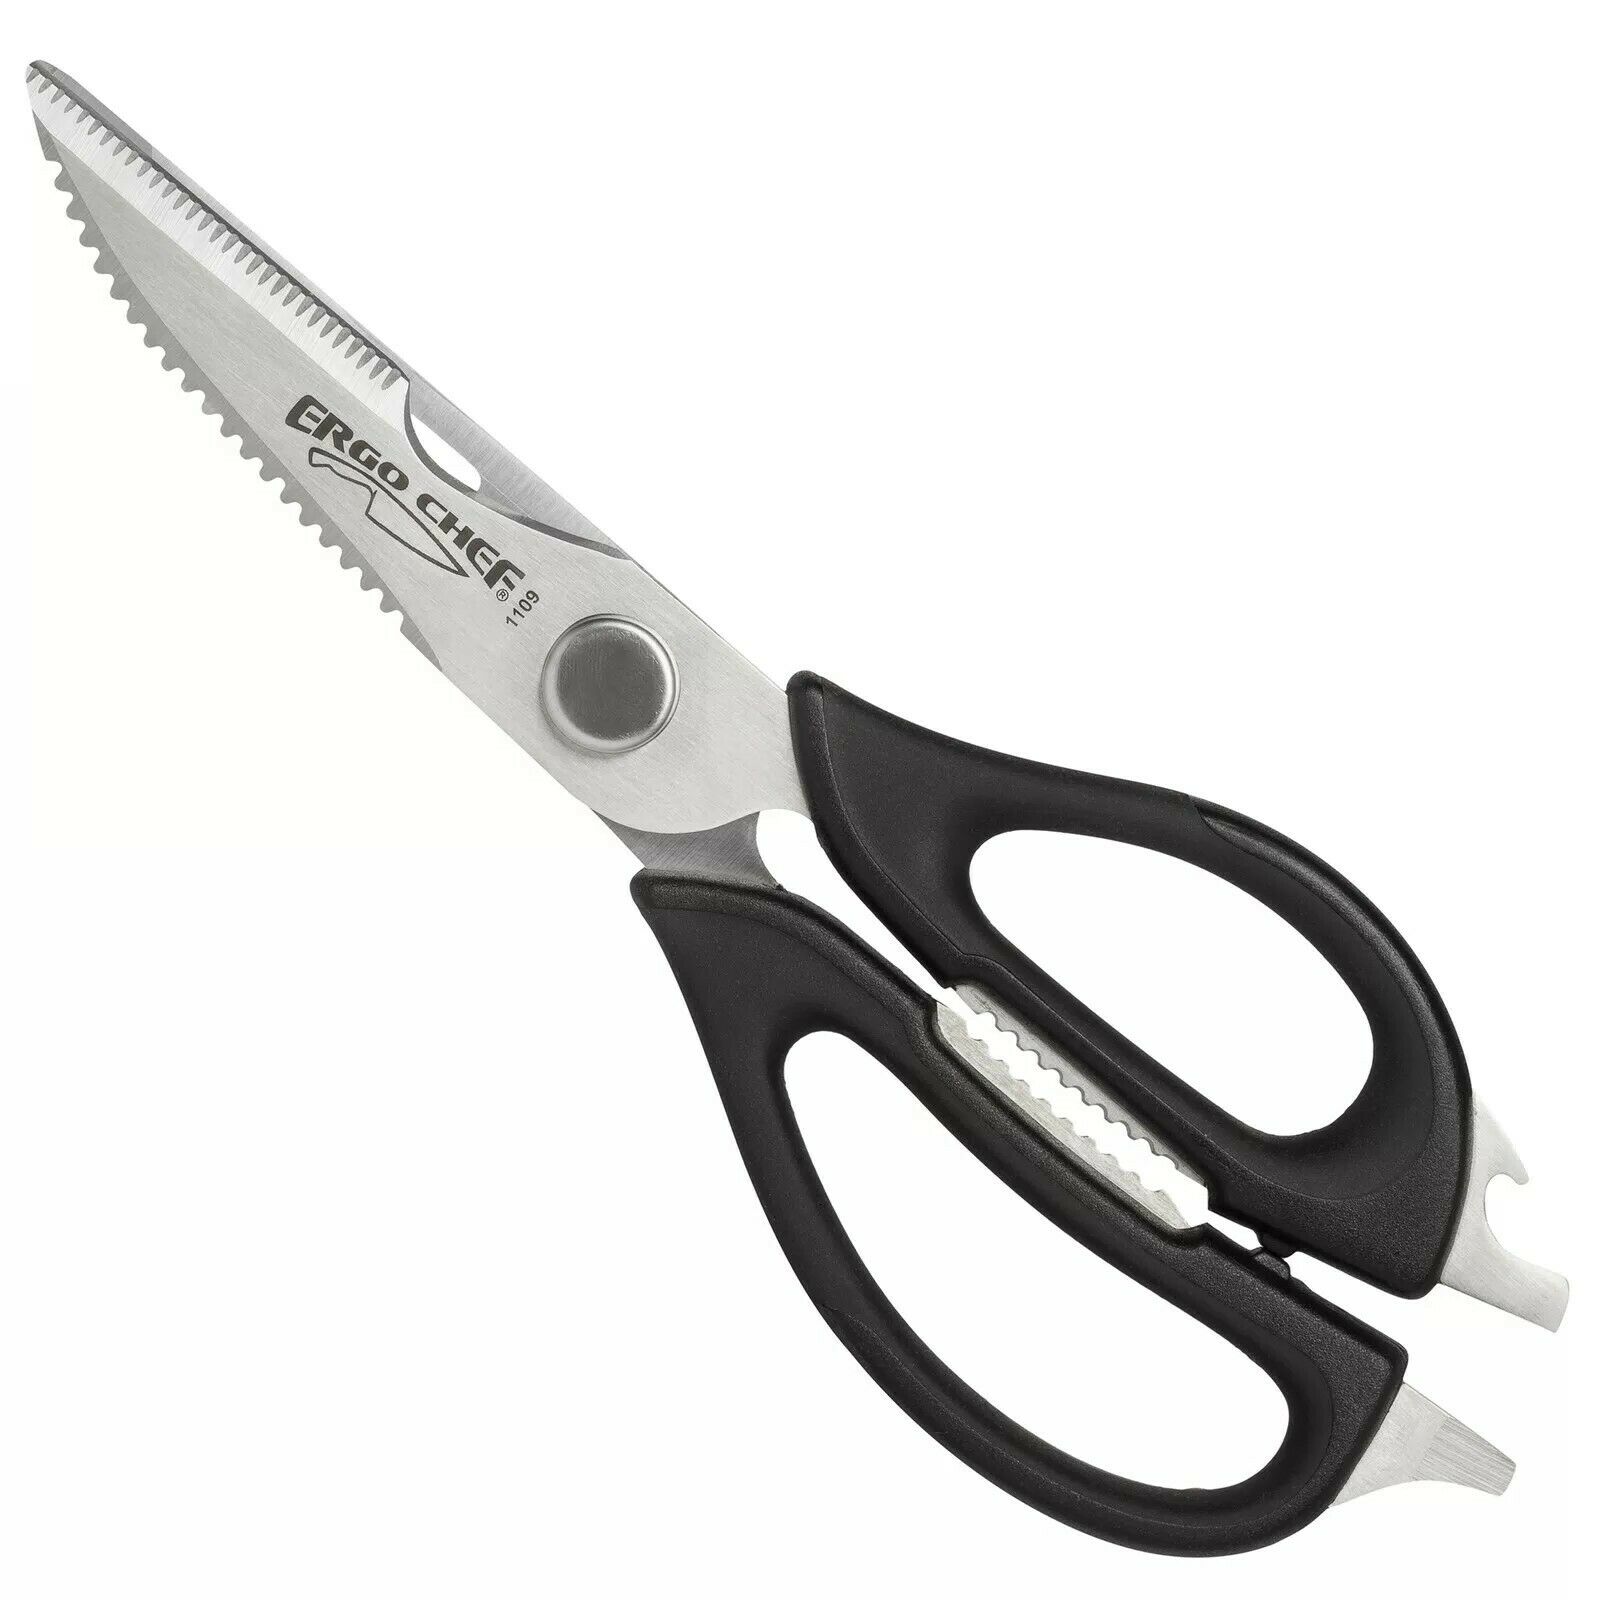 Ergo Chef Come Apart Kitchen Shears Scissors Heavy Duty 8 Features Pro Series